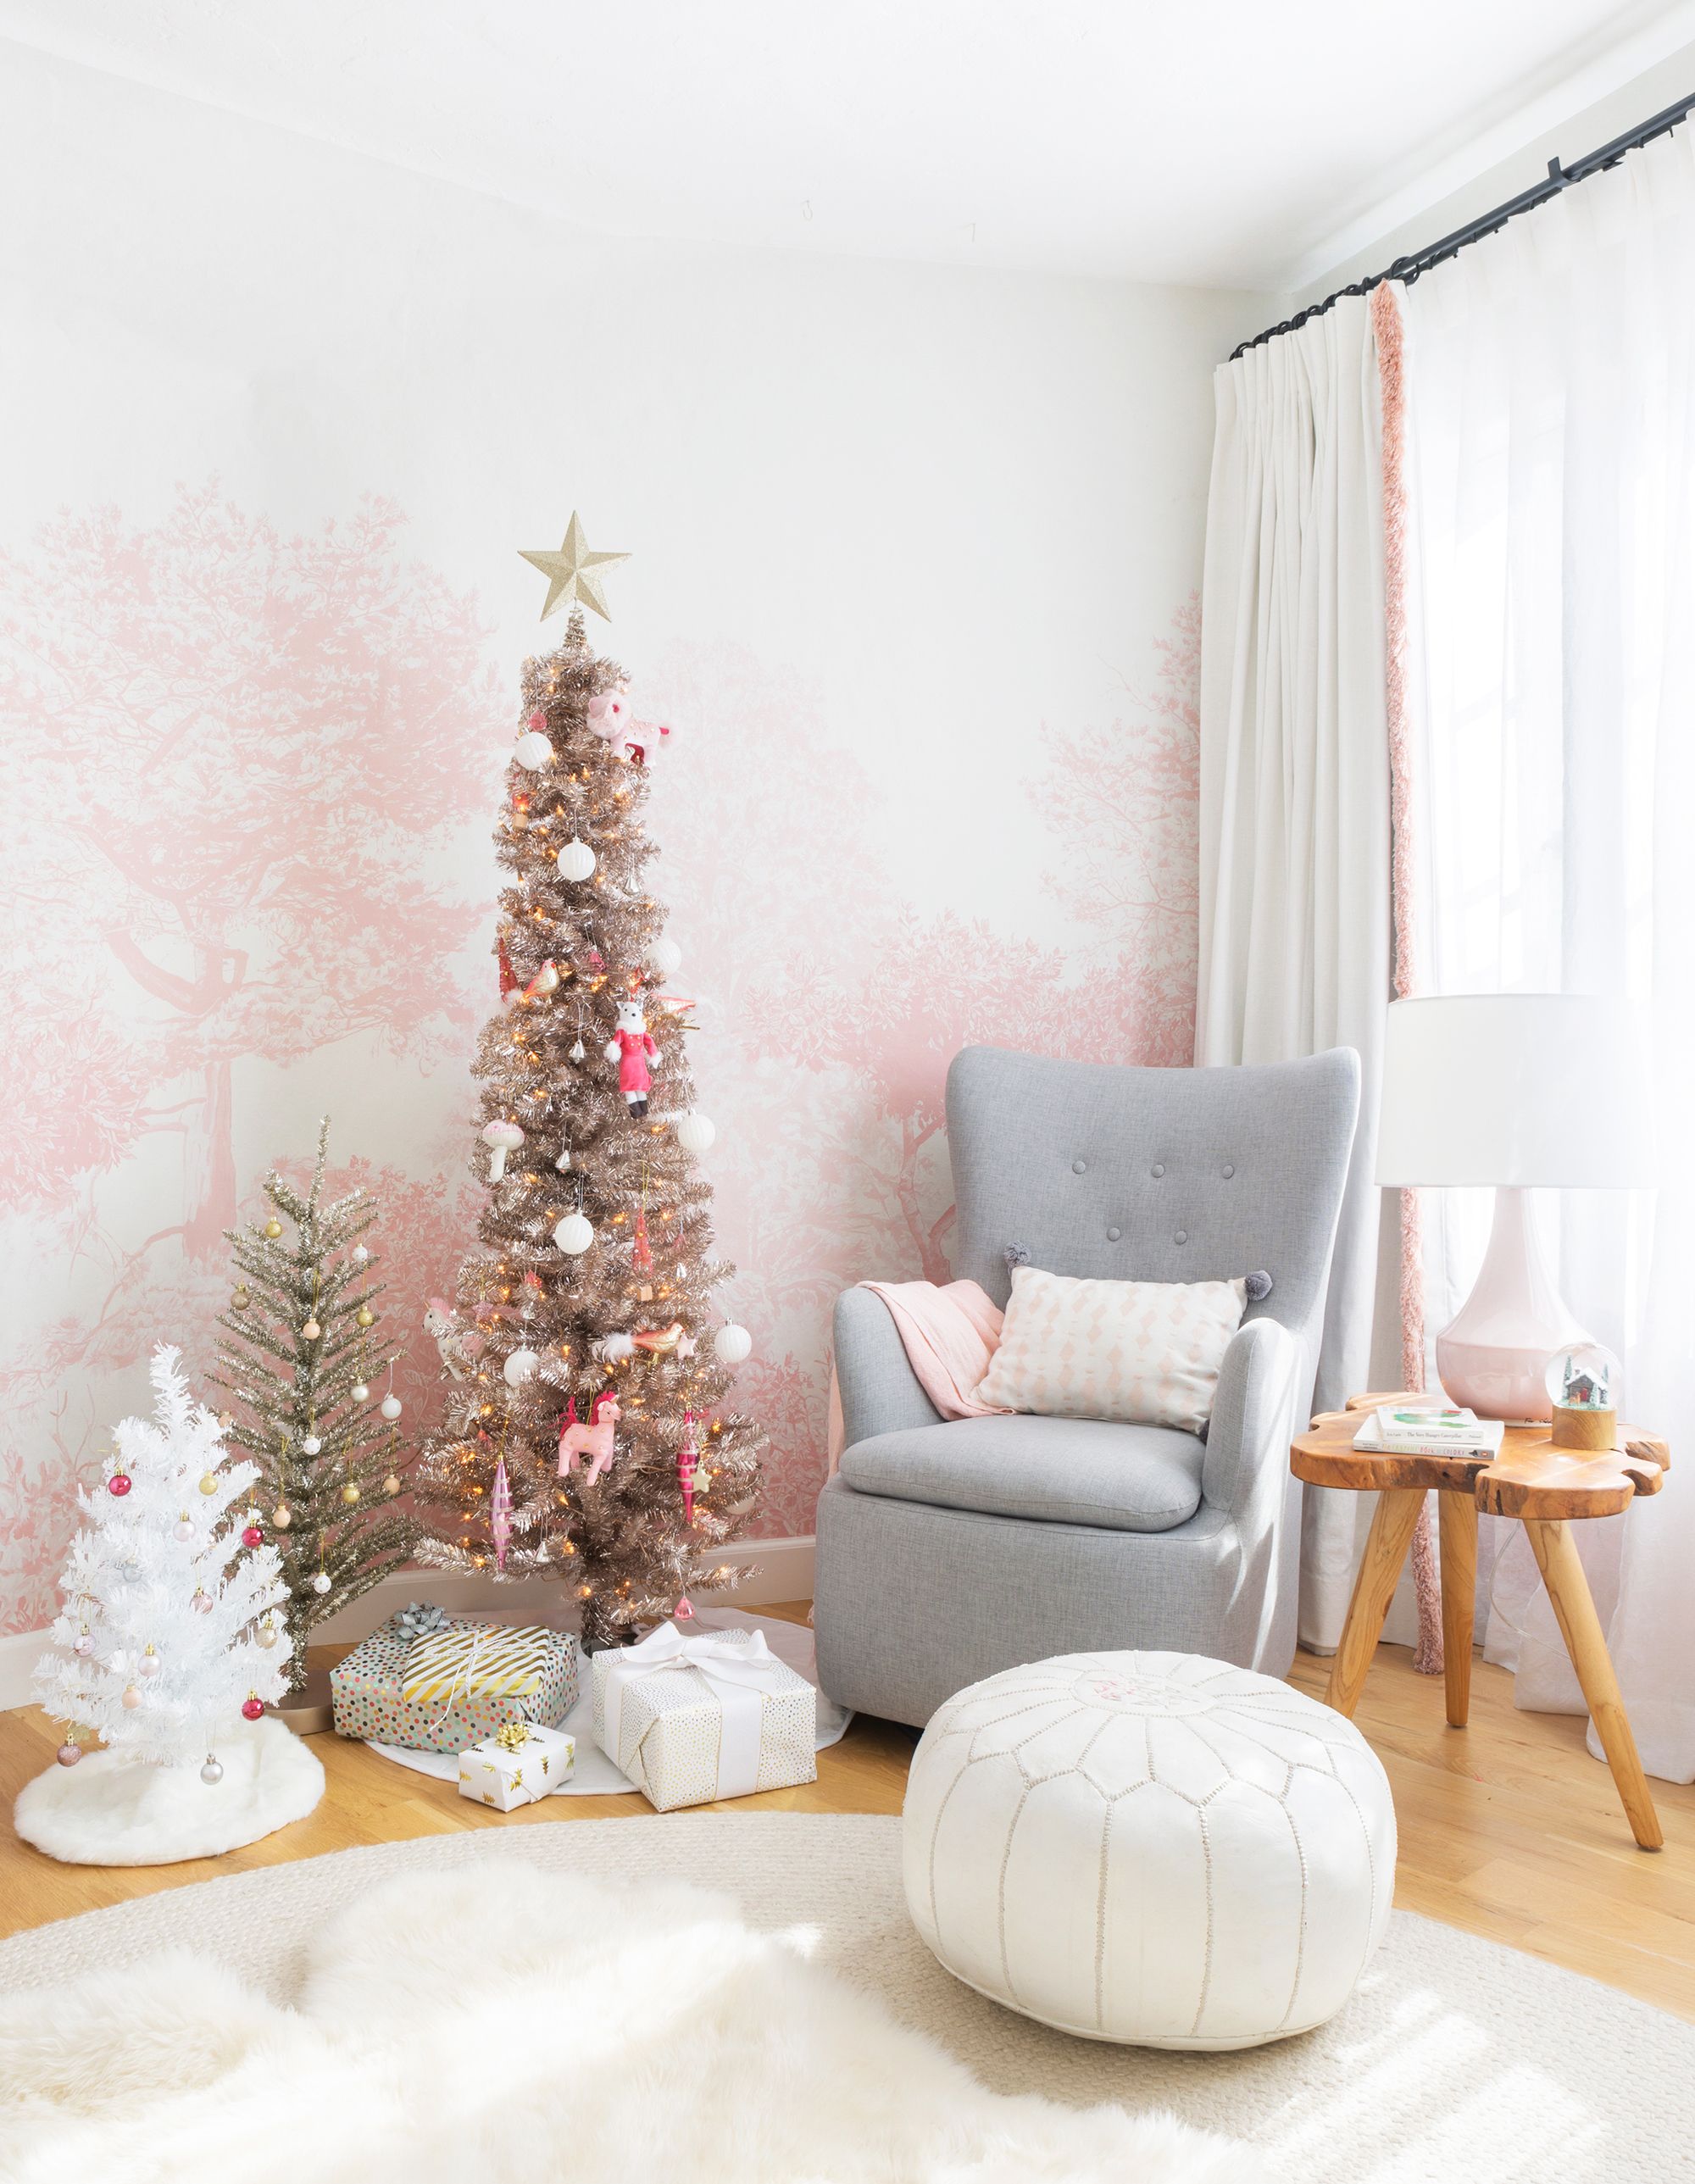 31 Small Christmas Tree Ideas - Mini Holiday Trees to Decorate